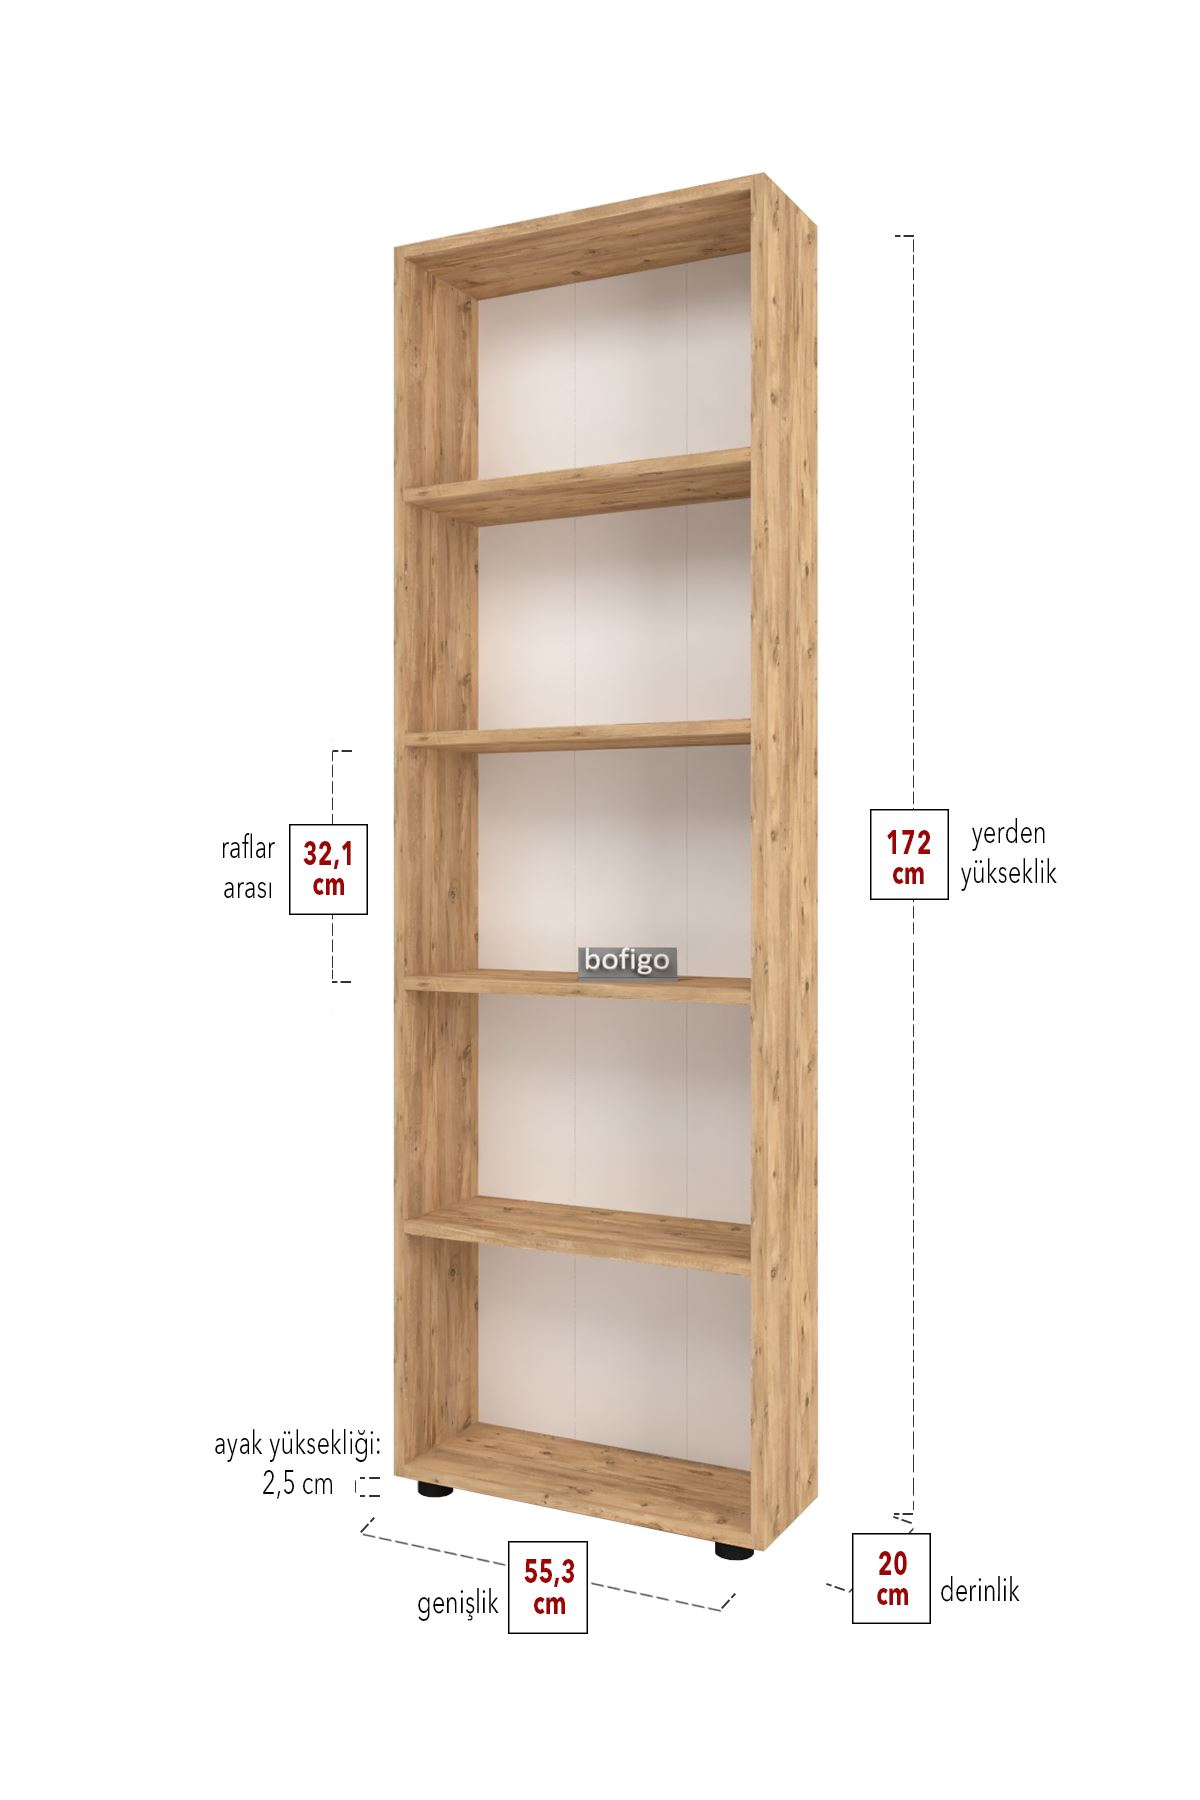 Bofigo Decorative 5 Shelf Bookcase Pine